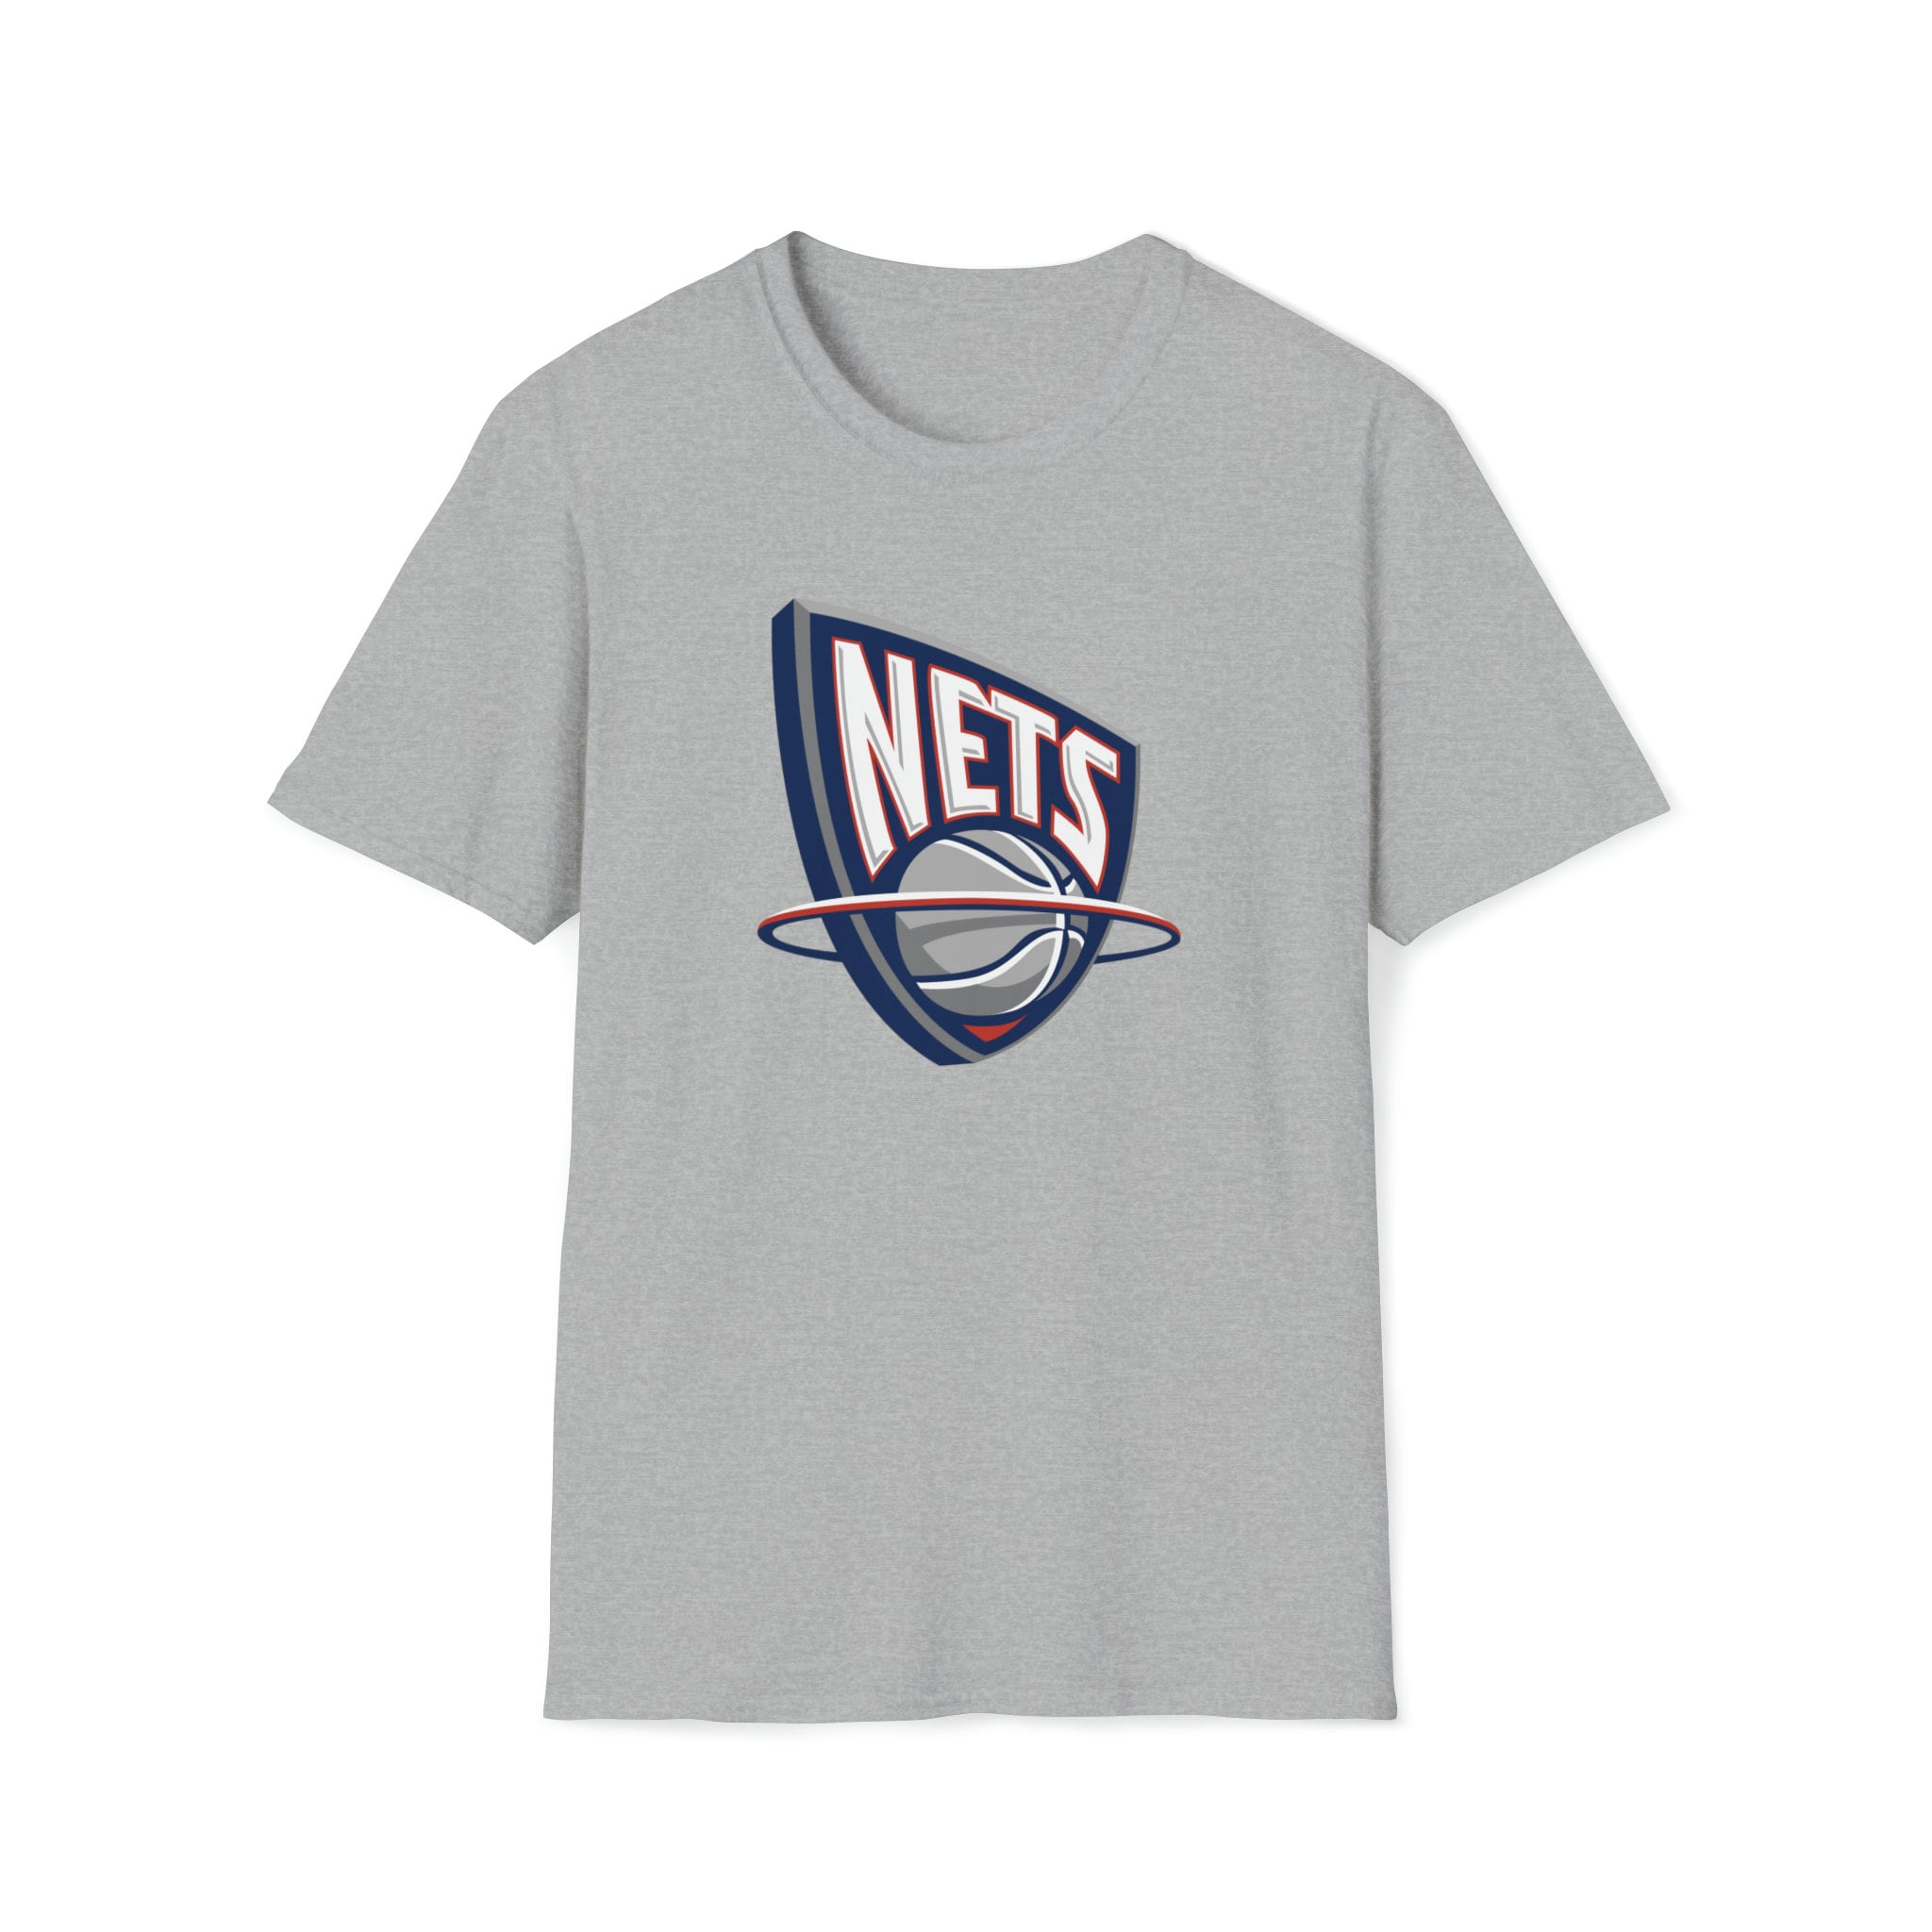 Unk NBA Store Brooklyn Nets T-shirt NEW NWT S Embossed Printing